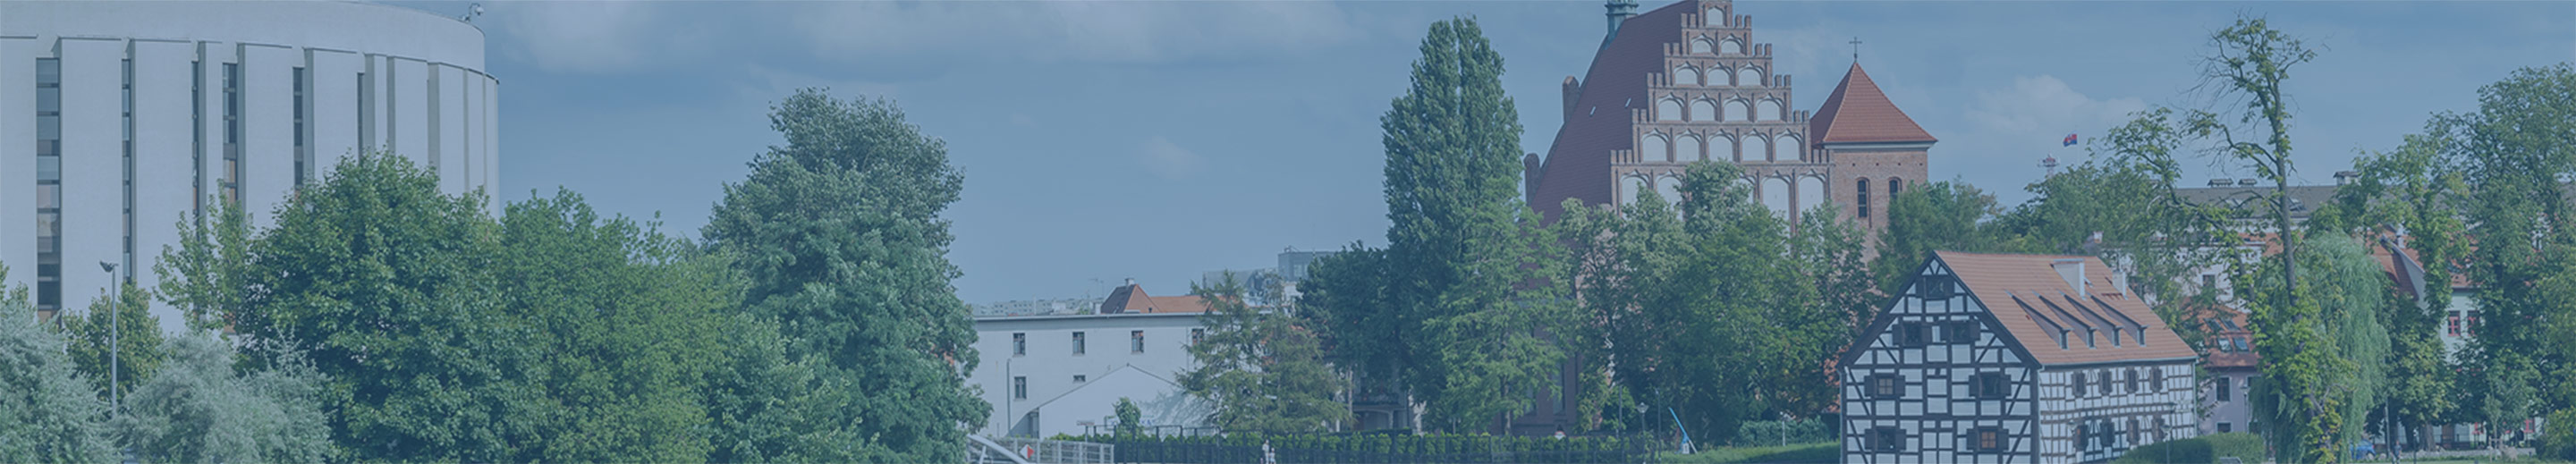 Bydgoszcz - panorama